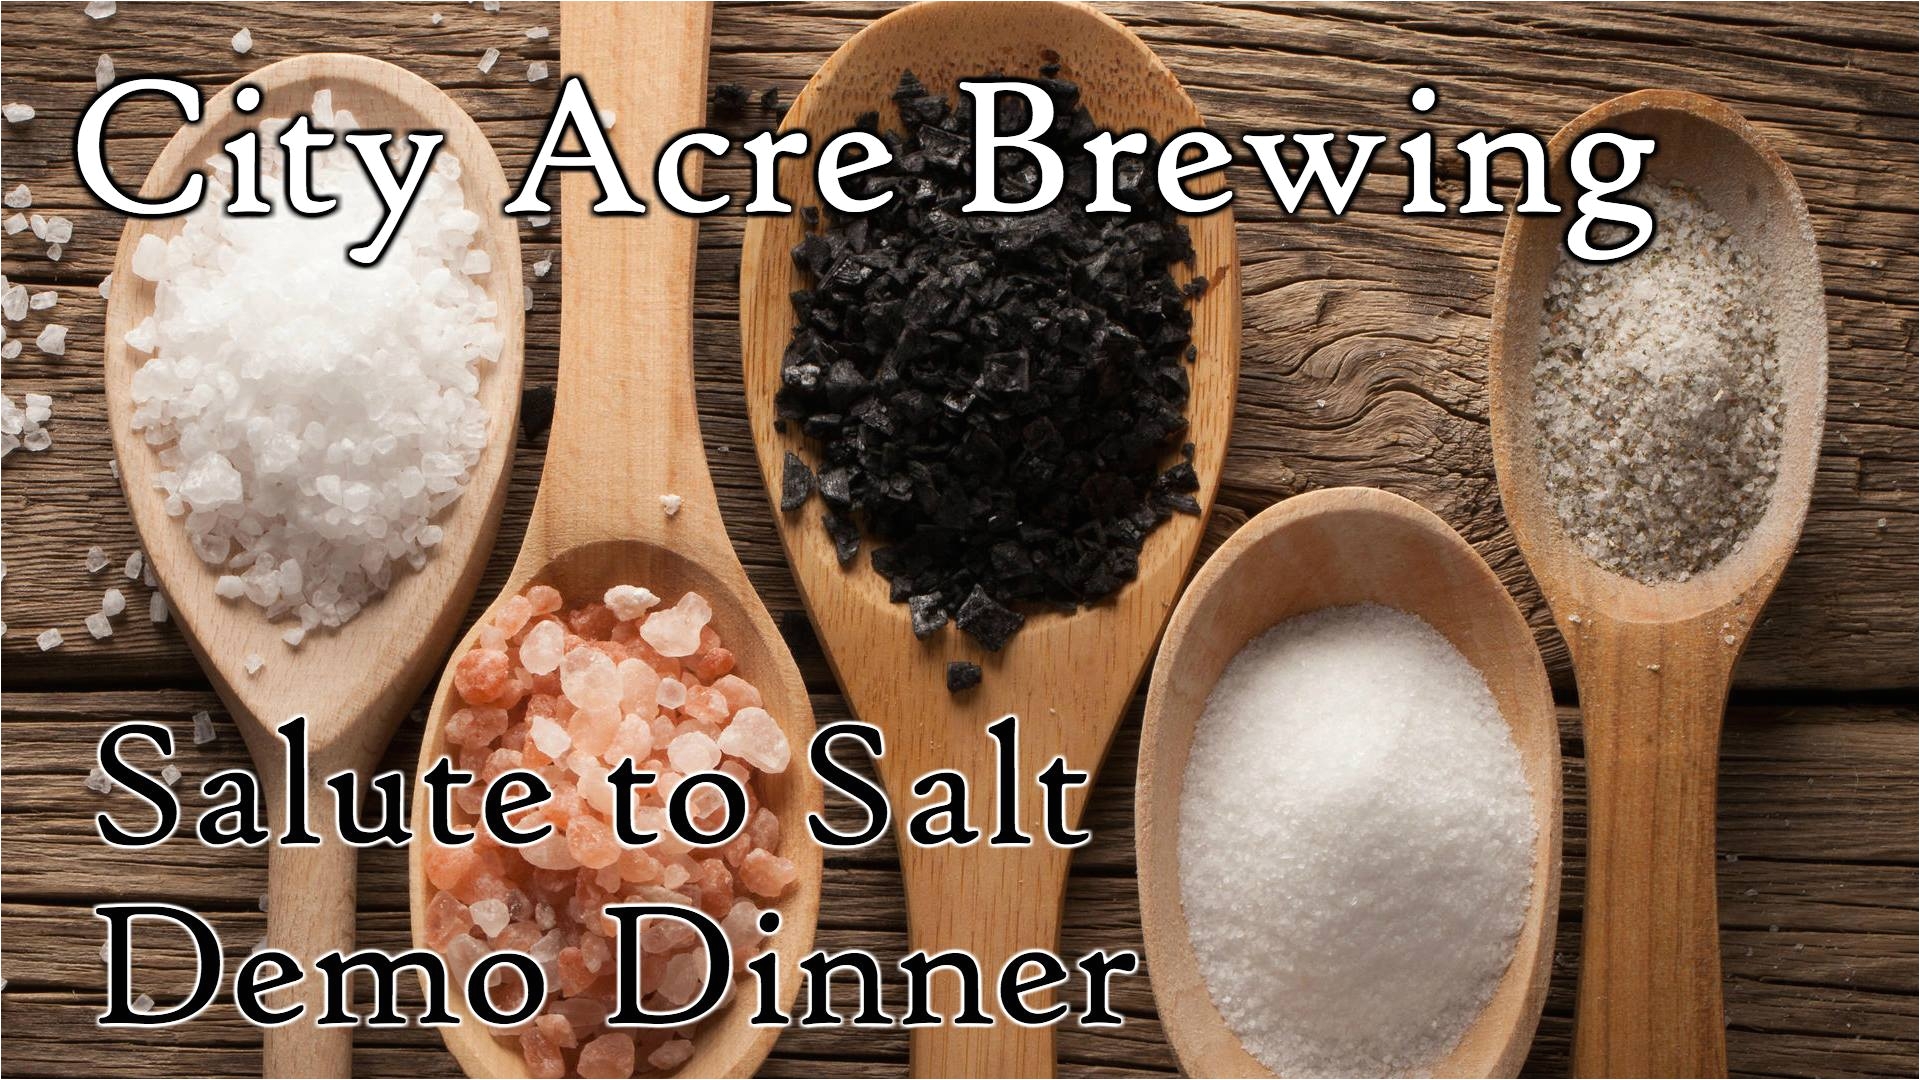 salute to salt demo dinner city acre brewing co houston 27 september